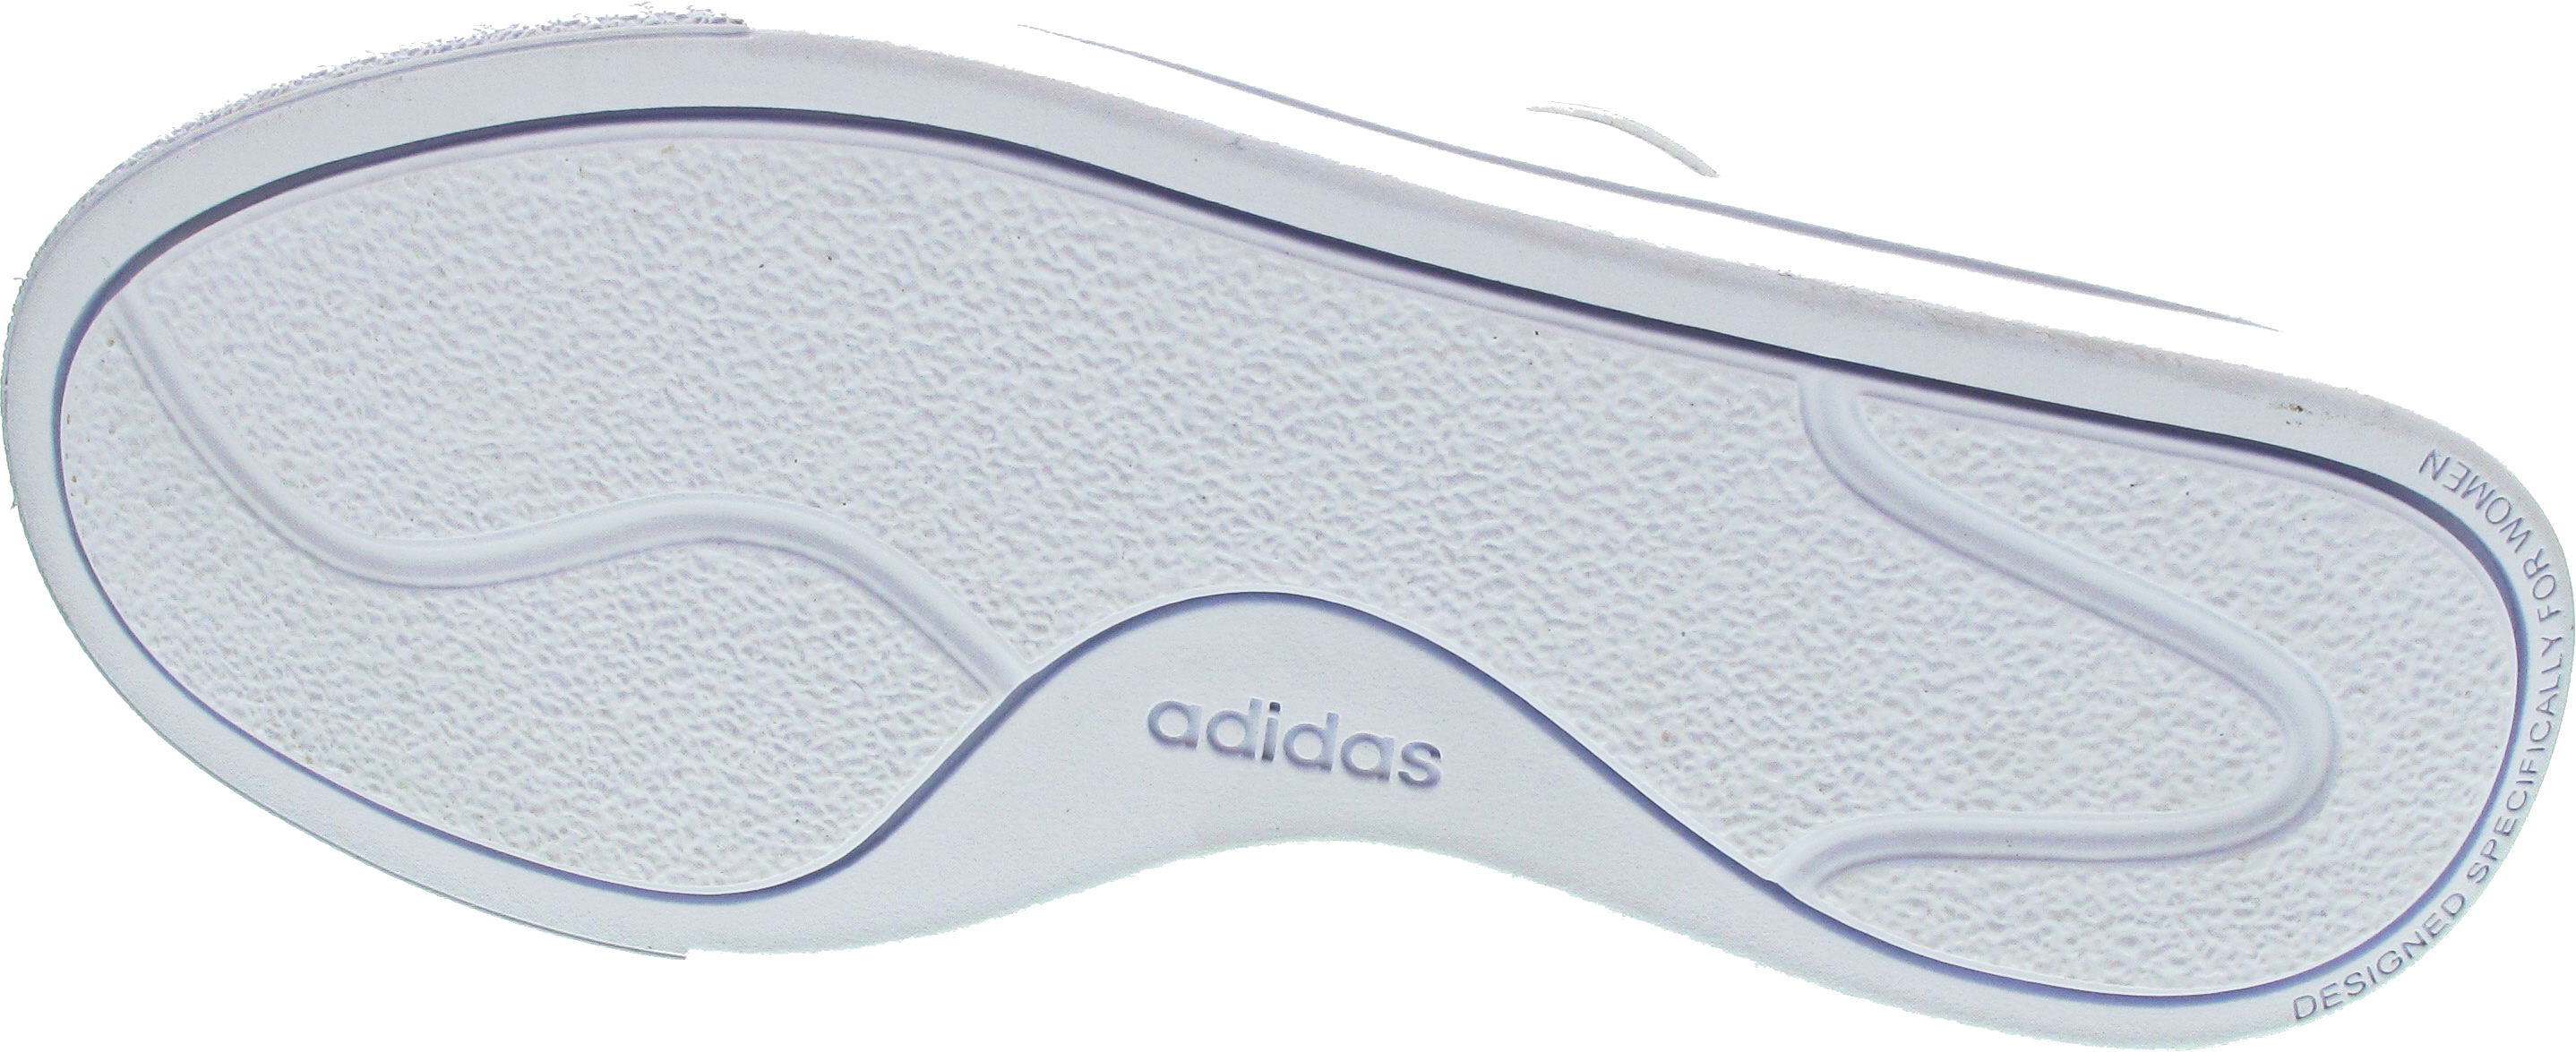 adidas Court Platform